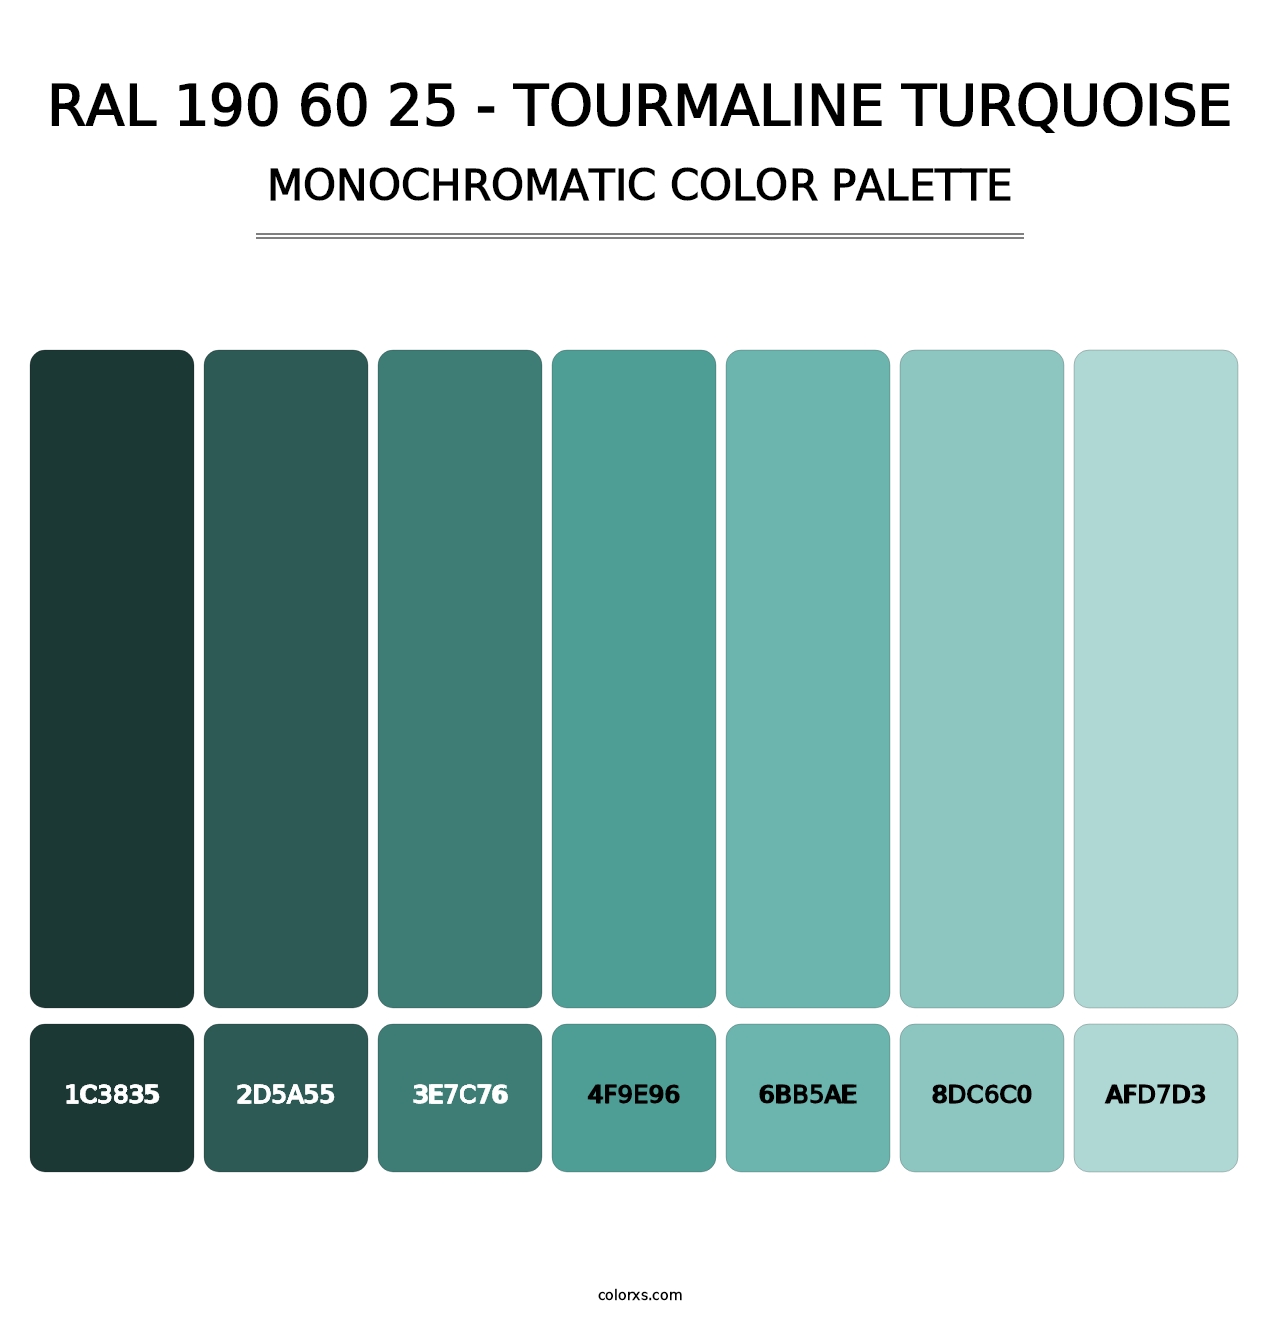 RAL 190 60 25 - Tourmaline Turquoise - Monochromatic Color Palette